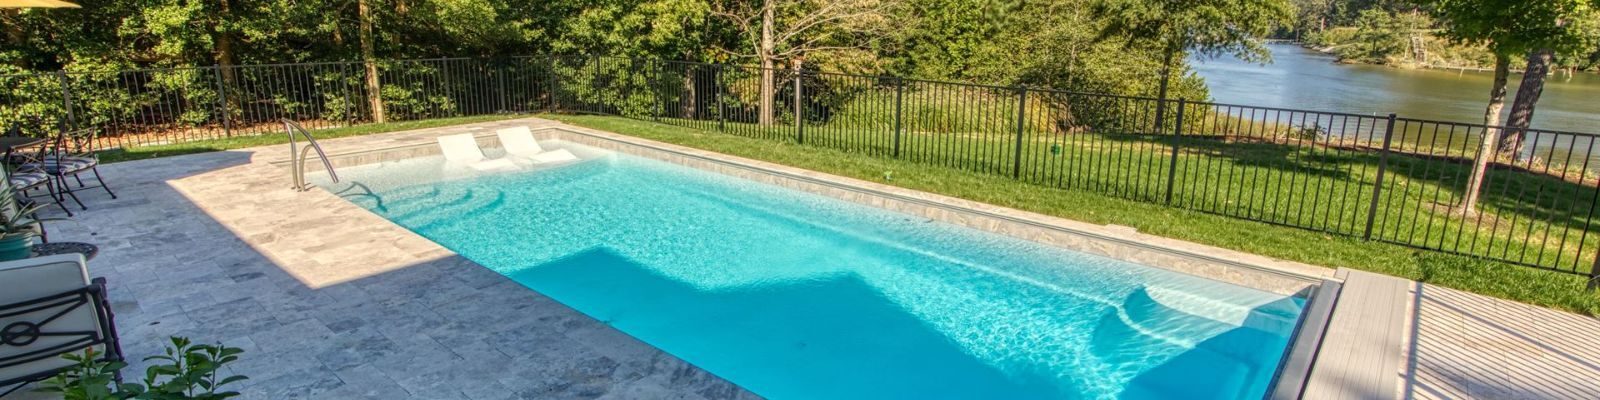 Large backyard swimming pool